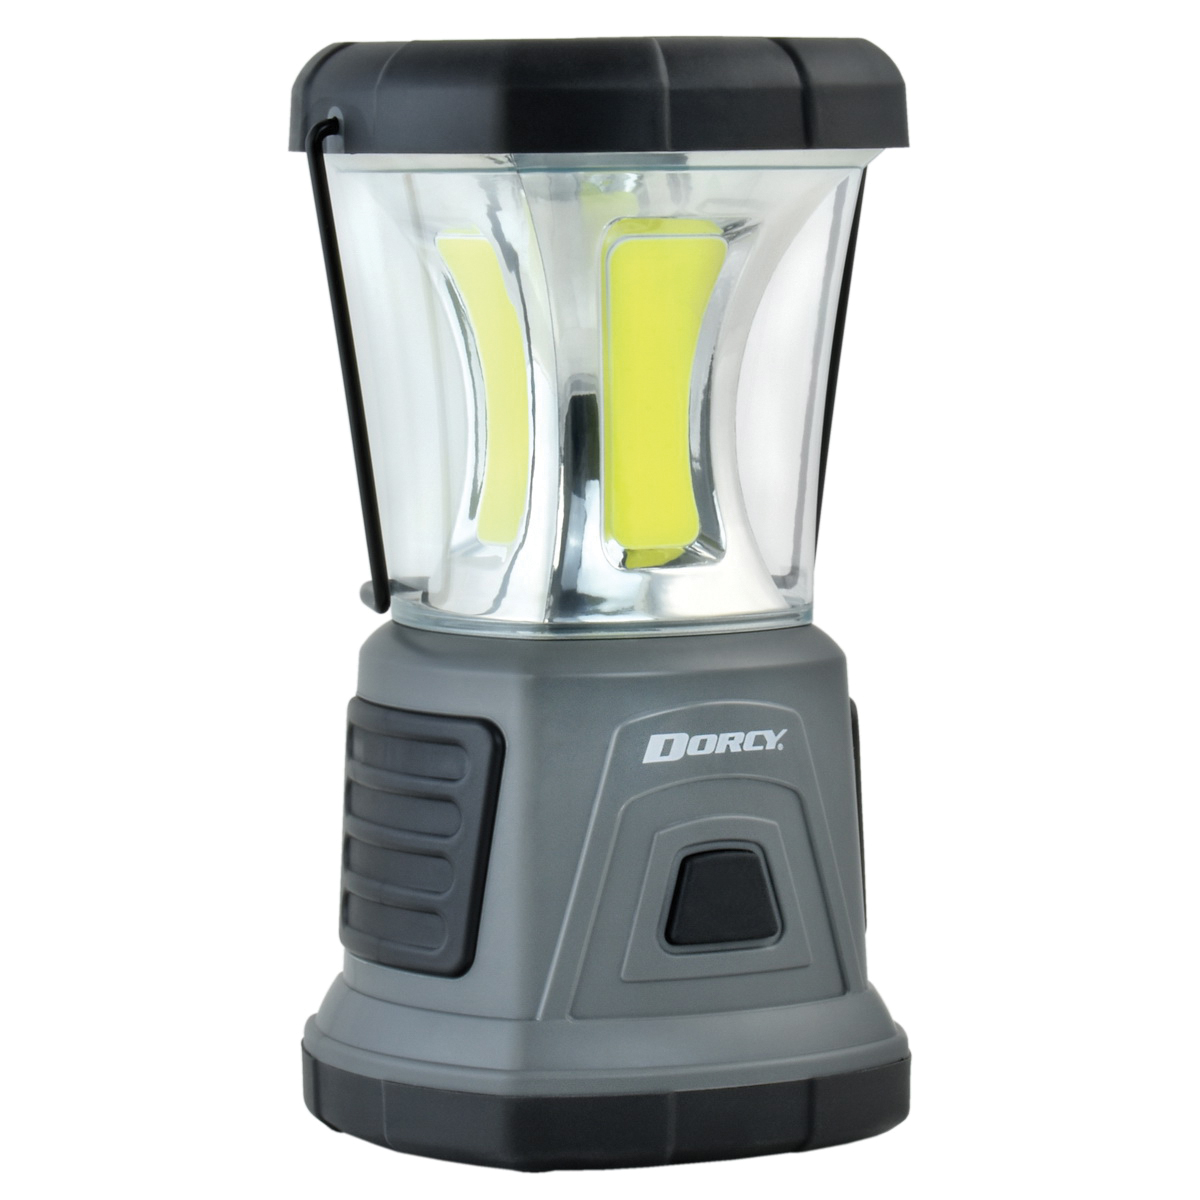 dorcy-adventure-max-series-41-3119-lantern-with-emergency-signaling-d-battery-led-lamp-2000-lumens-lumens-blackgray